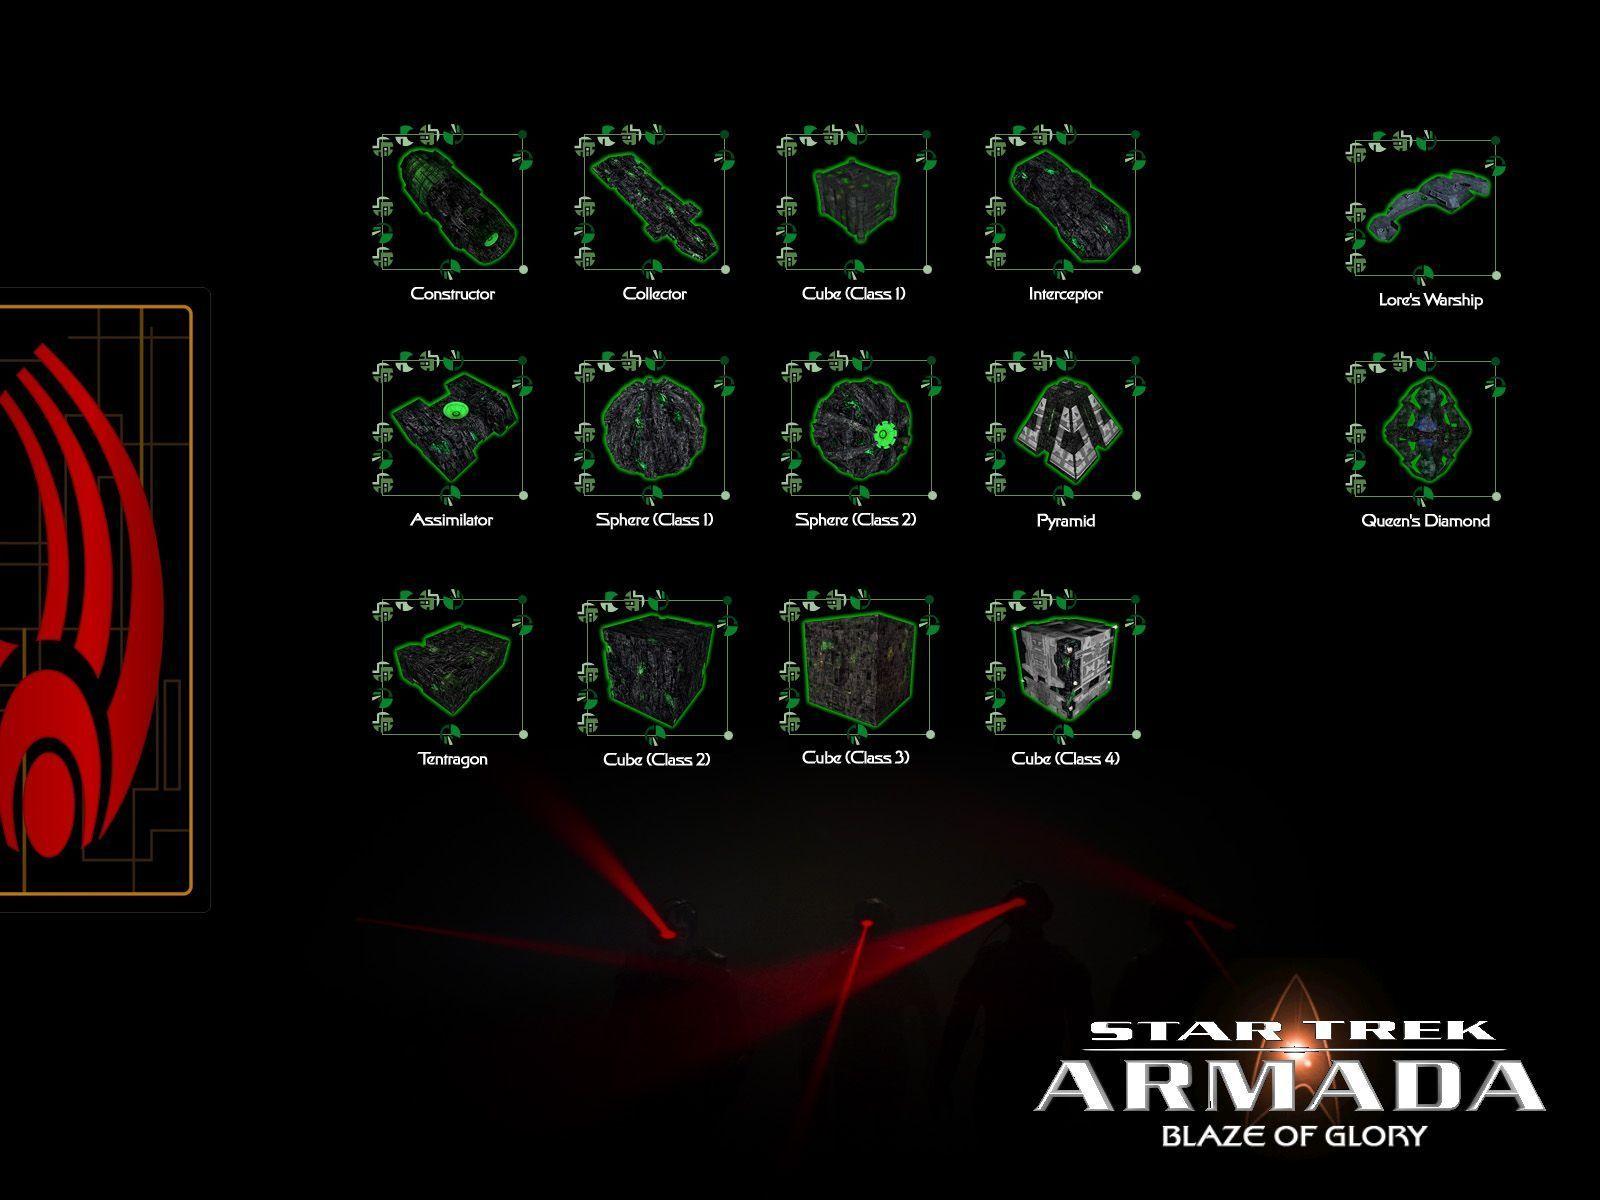 Borg vessels image Trek Armada: Blaze Of Glory Mod for Star